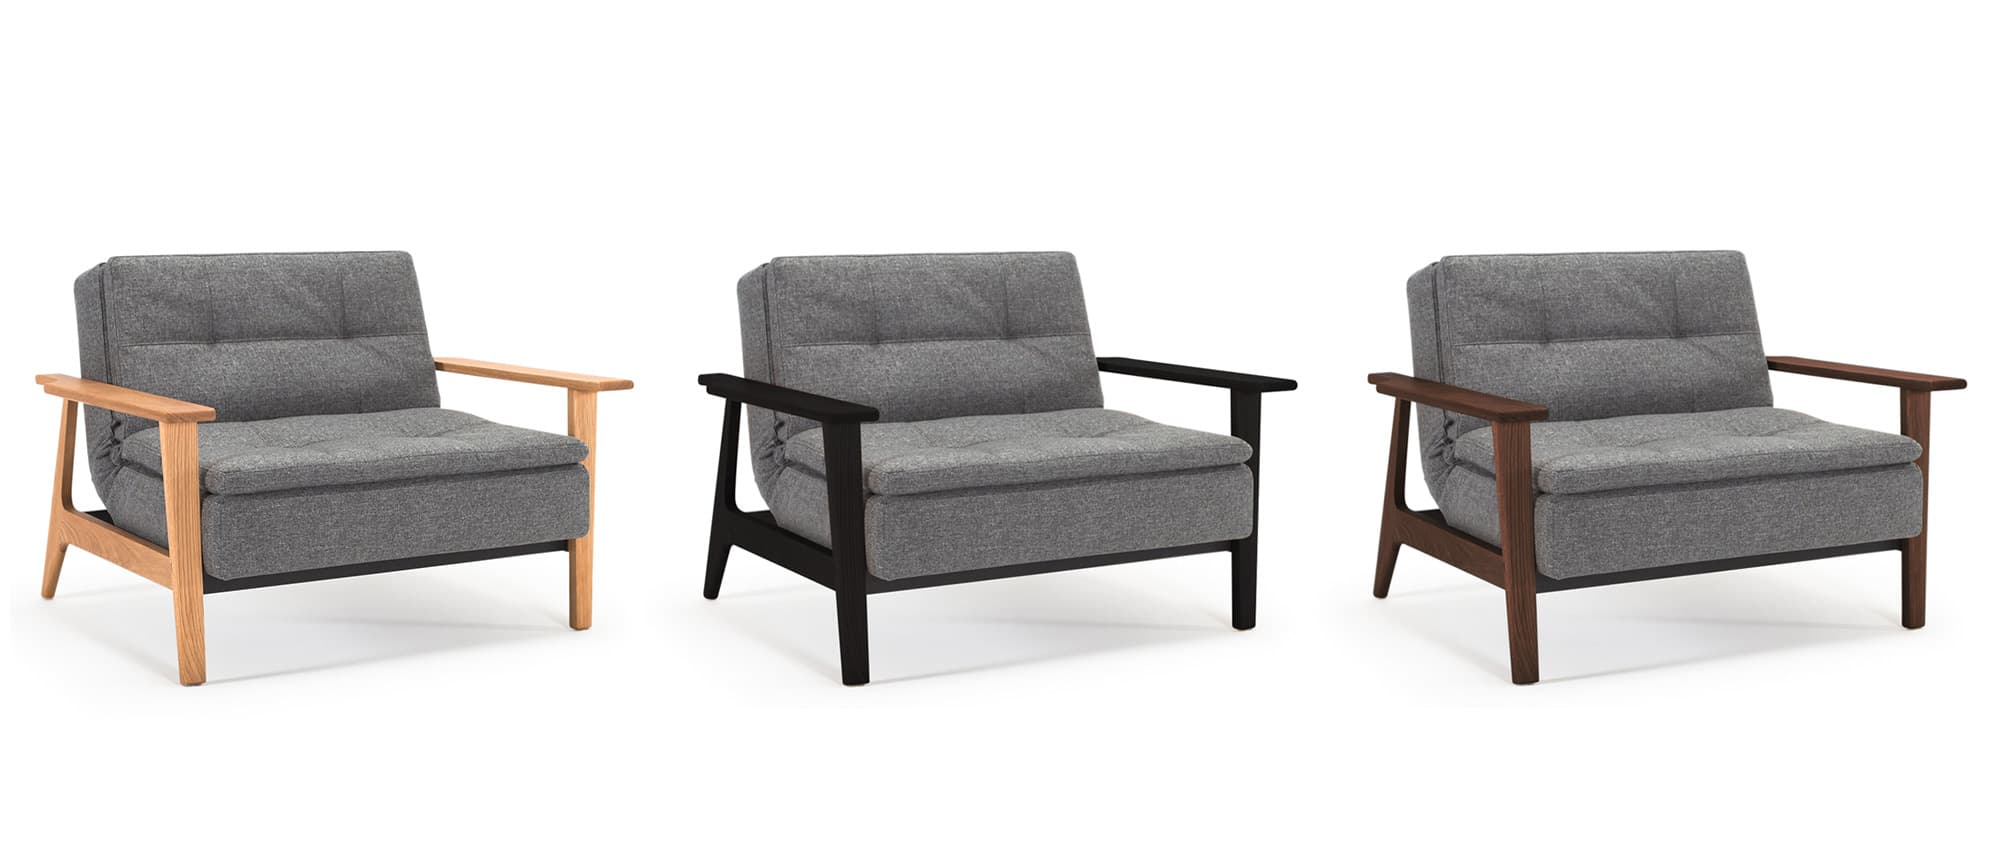 DUBLEXO Sessel mit Holzarmlehnen FREJ, Klappsessel mit verstellbarer Rückenlehne